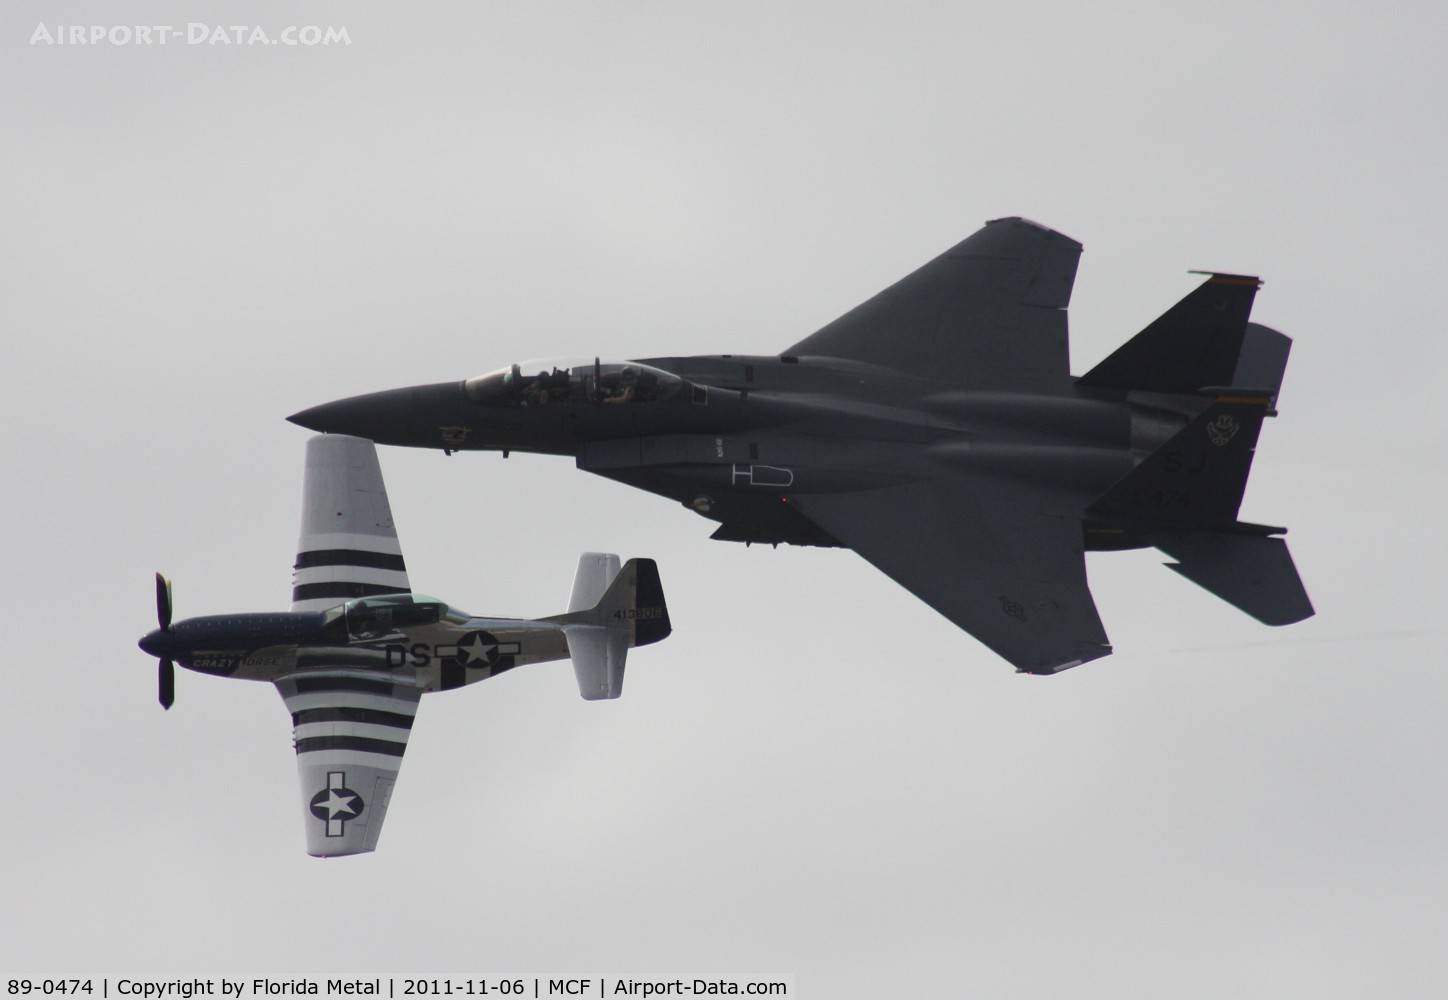 89-0474, 1989 McDonnell Douglas F-15E Strike Eagle C/N 1121/E096, F-15 with Crazy Horse